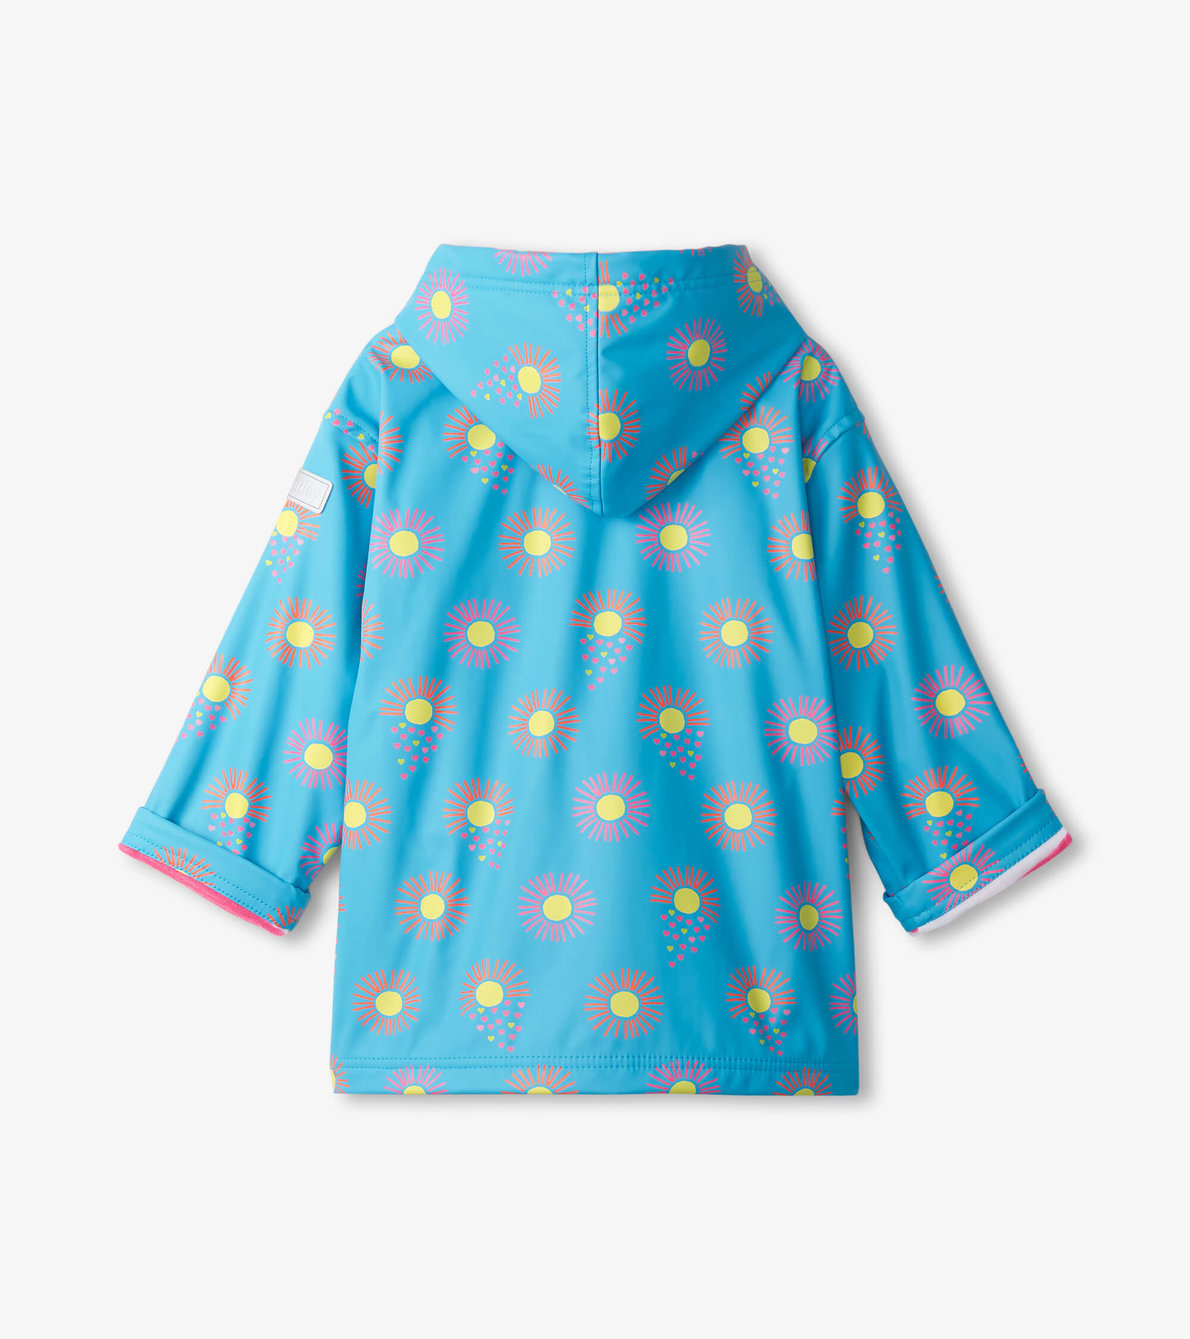 View larger image of Girls Sunrays Zip-Up Raincoat